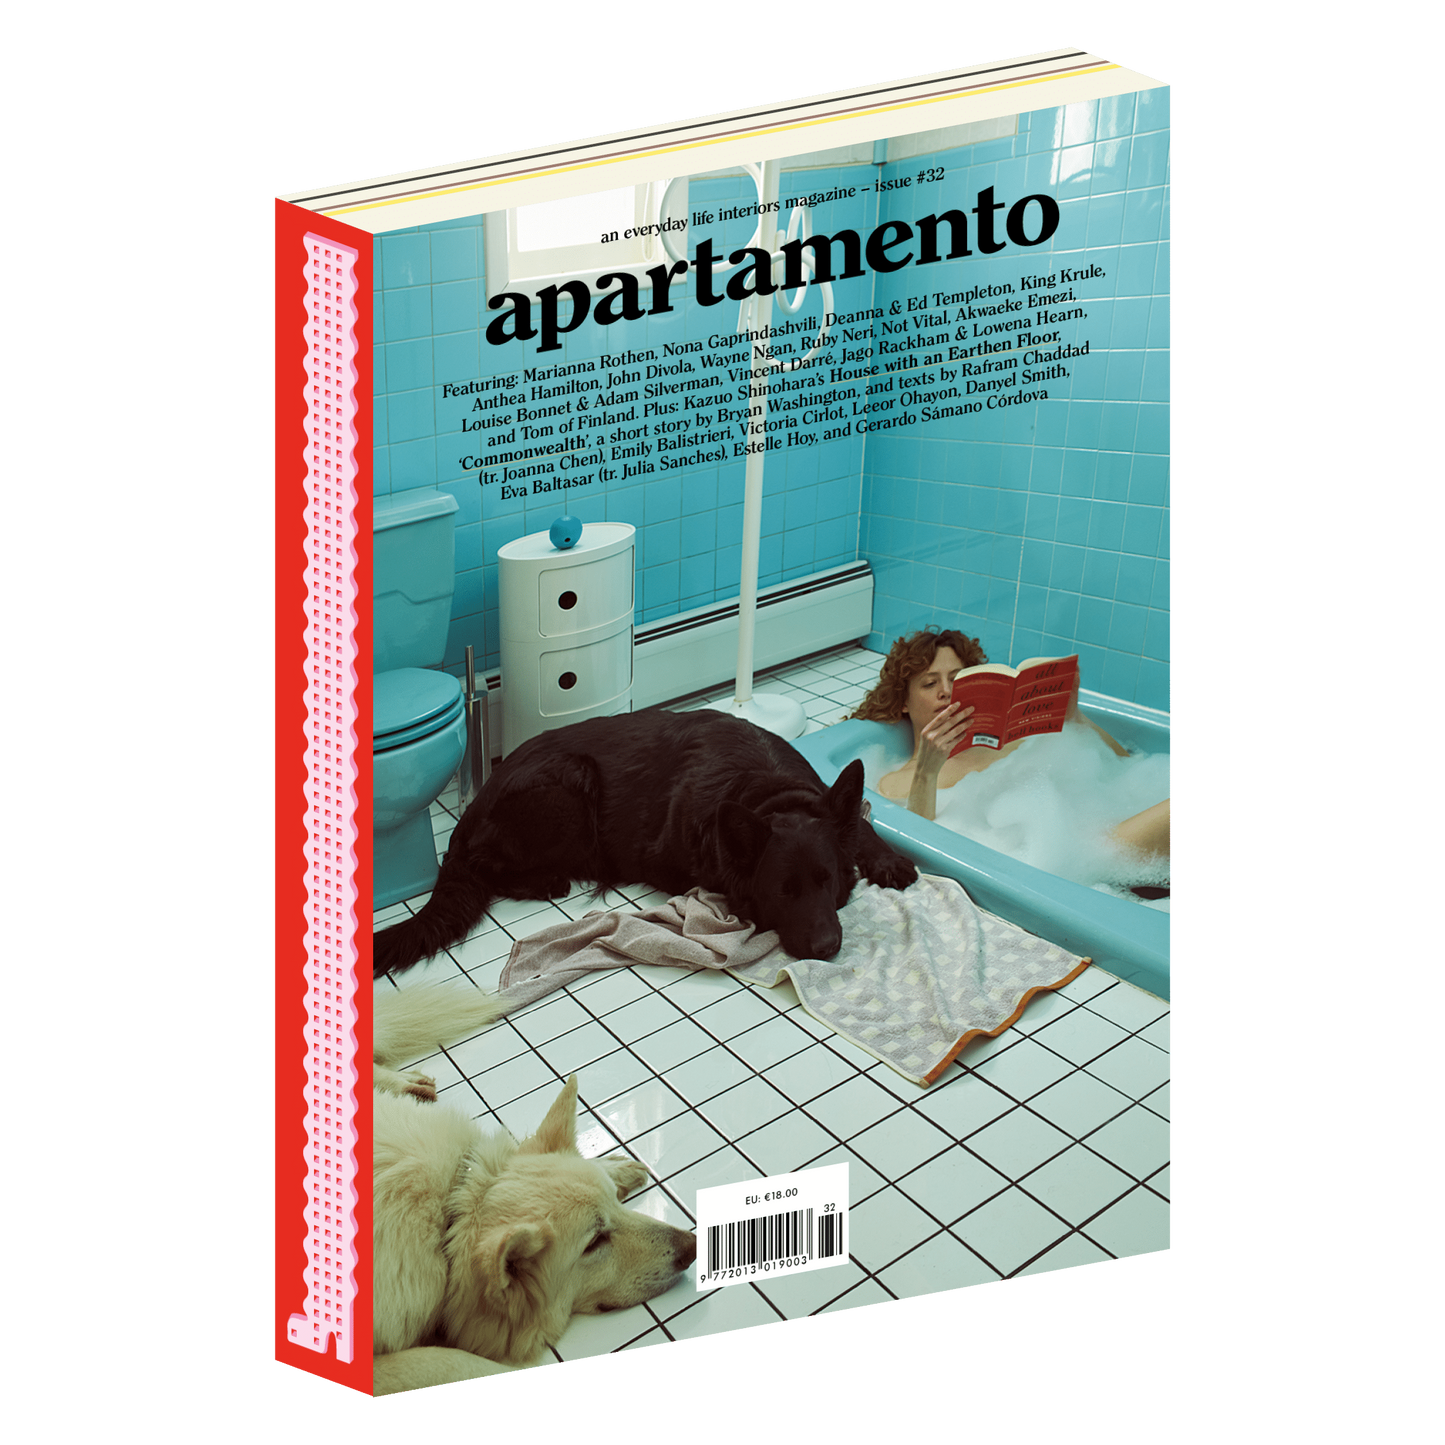 Apartamento, Issue #32